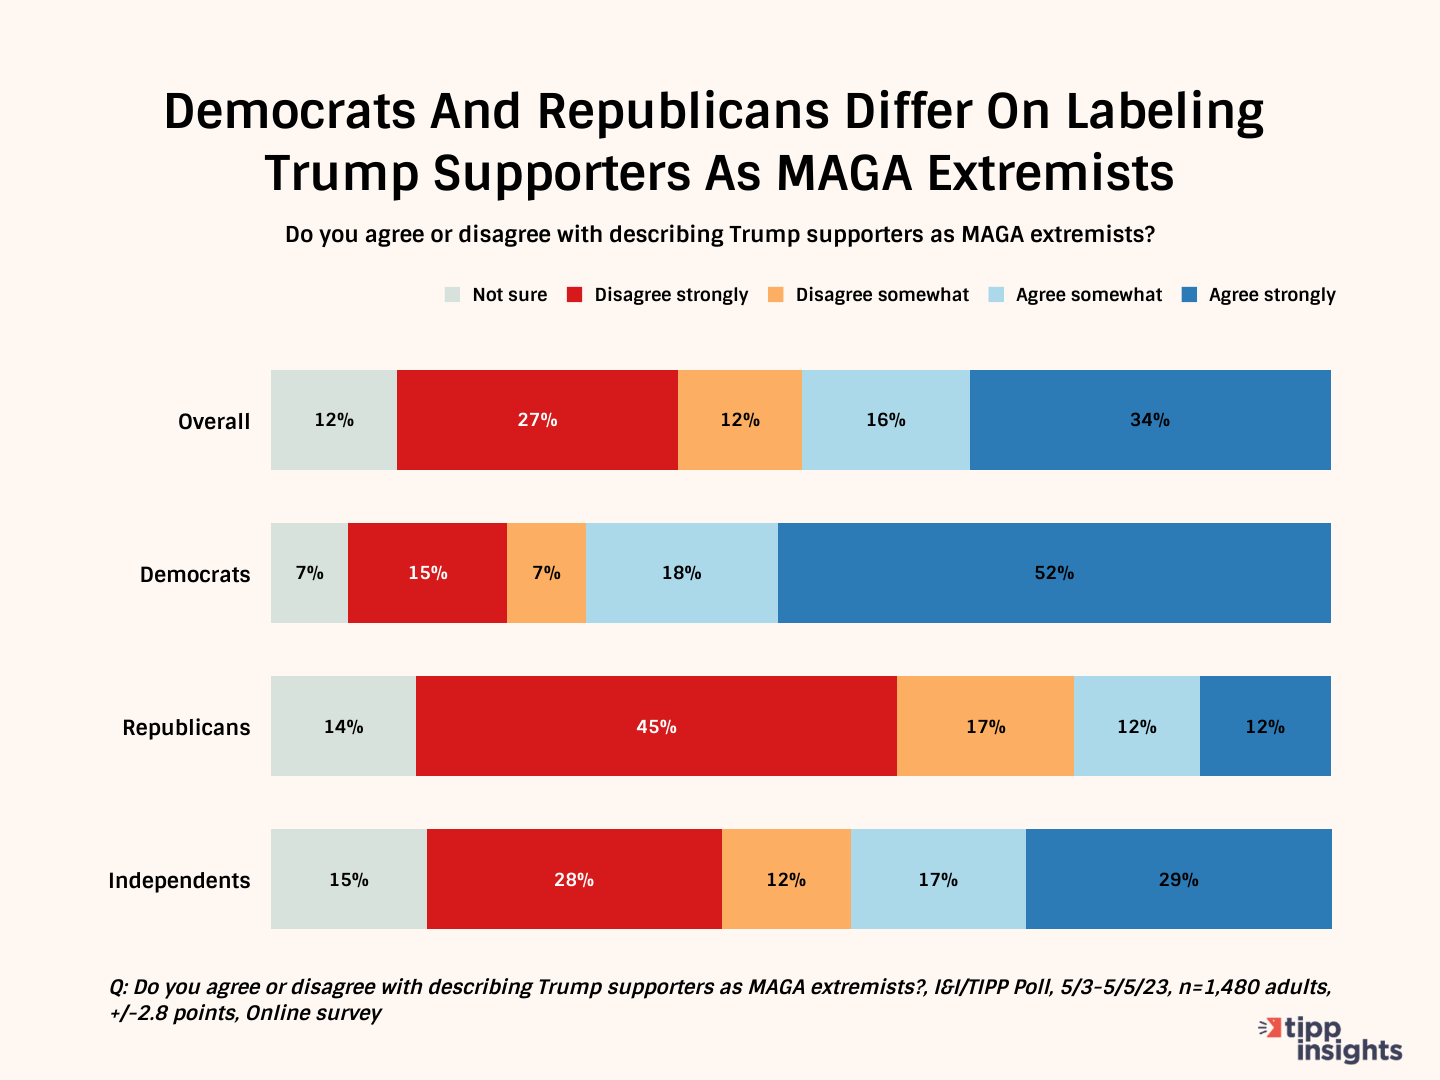 Can Trump Escape The 'MAGA Extremist' Label? I&I/TIPP Poll